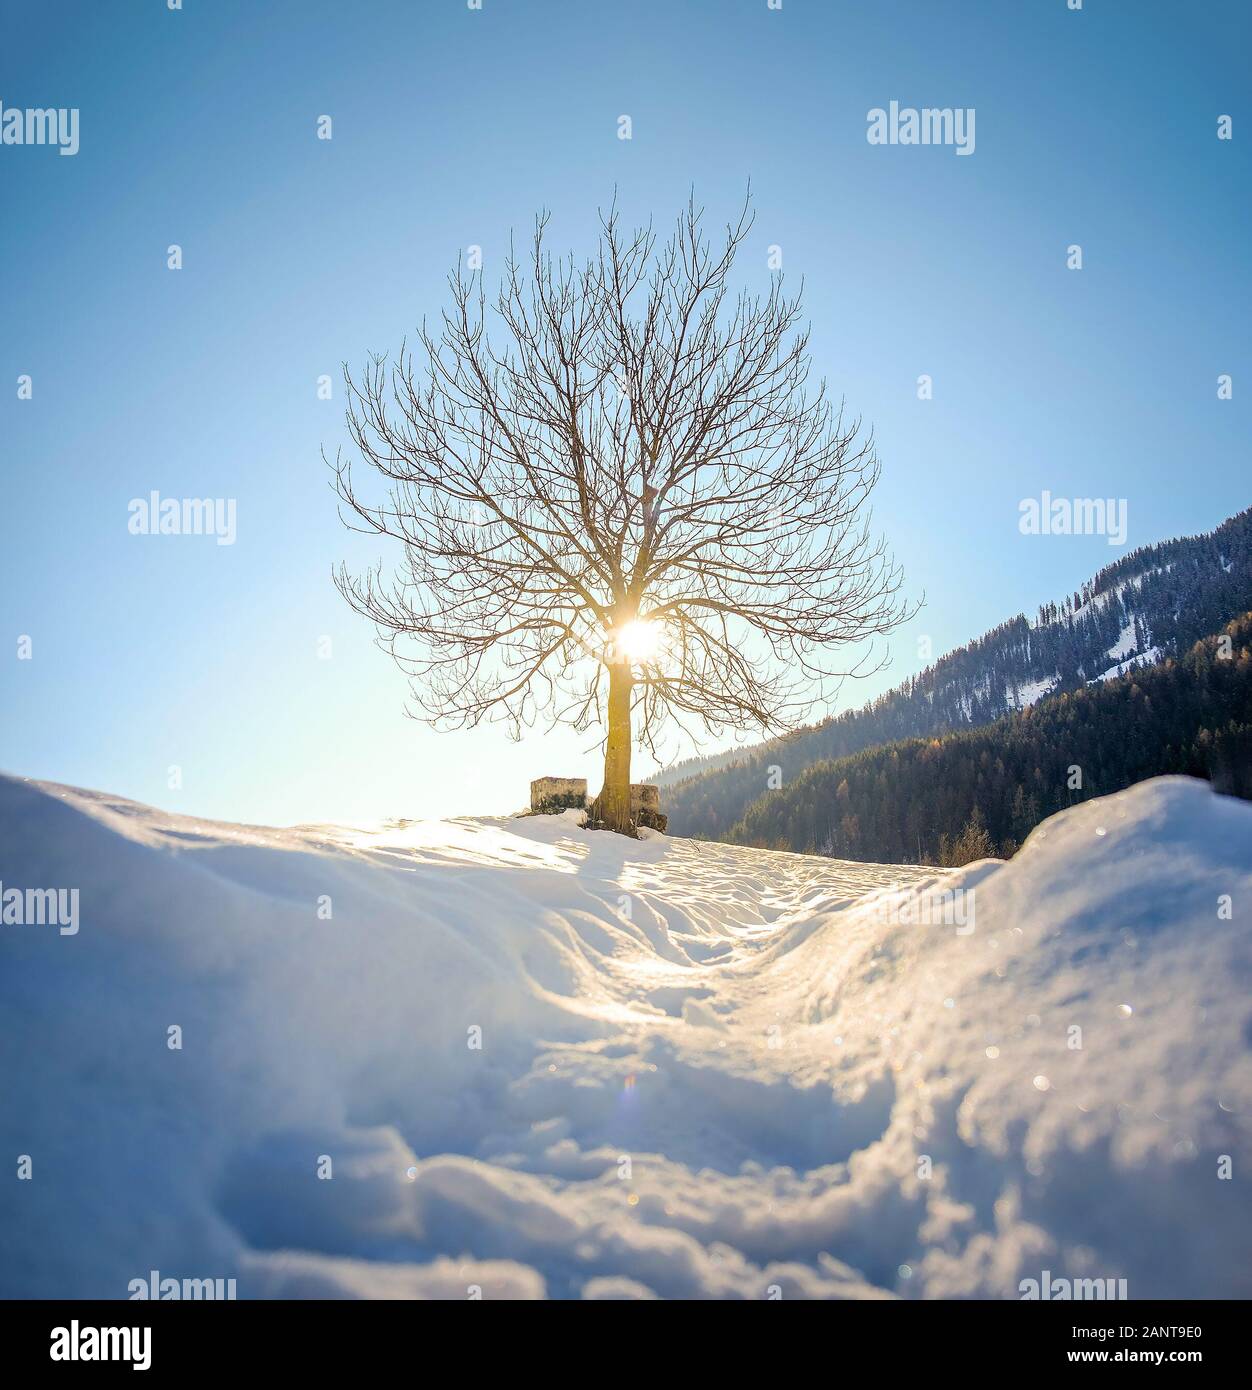 pov snow tree silhouette backlight through branches Stock Photo